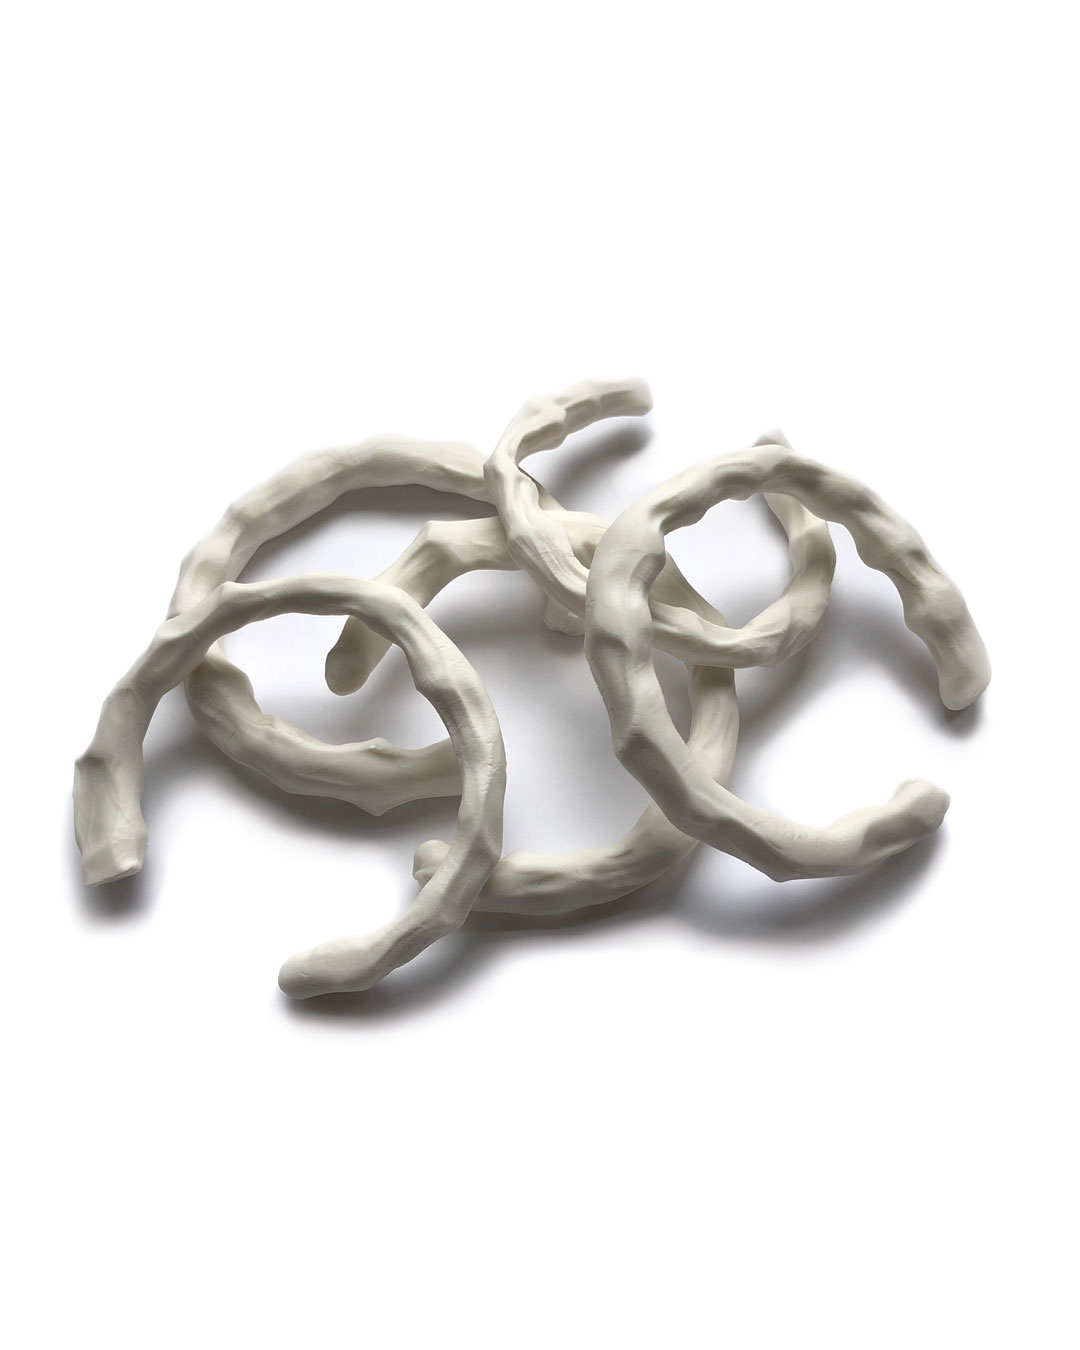 Chequita Nahar, Pemba, 2017, bracelet; porcelain, silicone polymer, 95 x 80 x 15 mm, €195 each